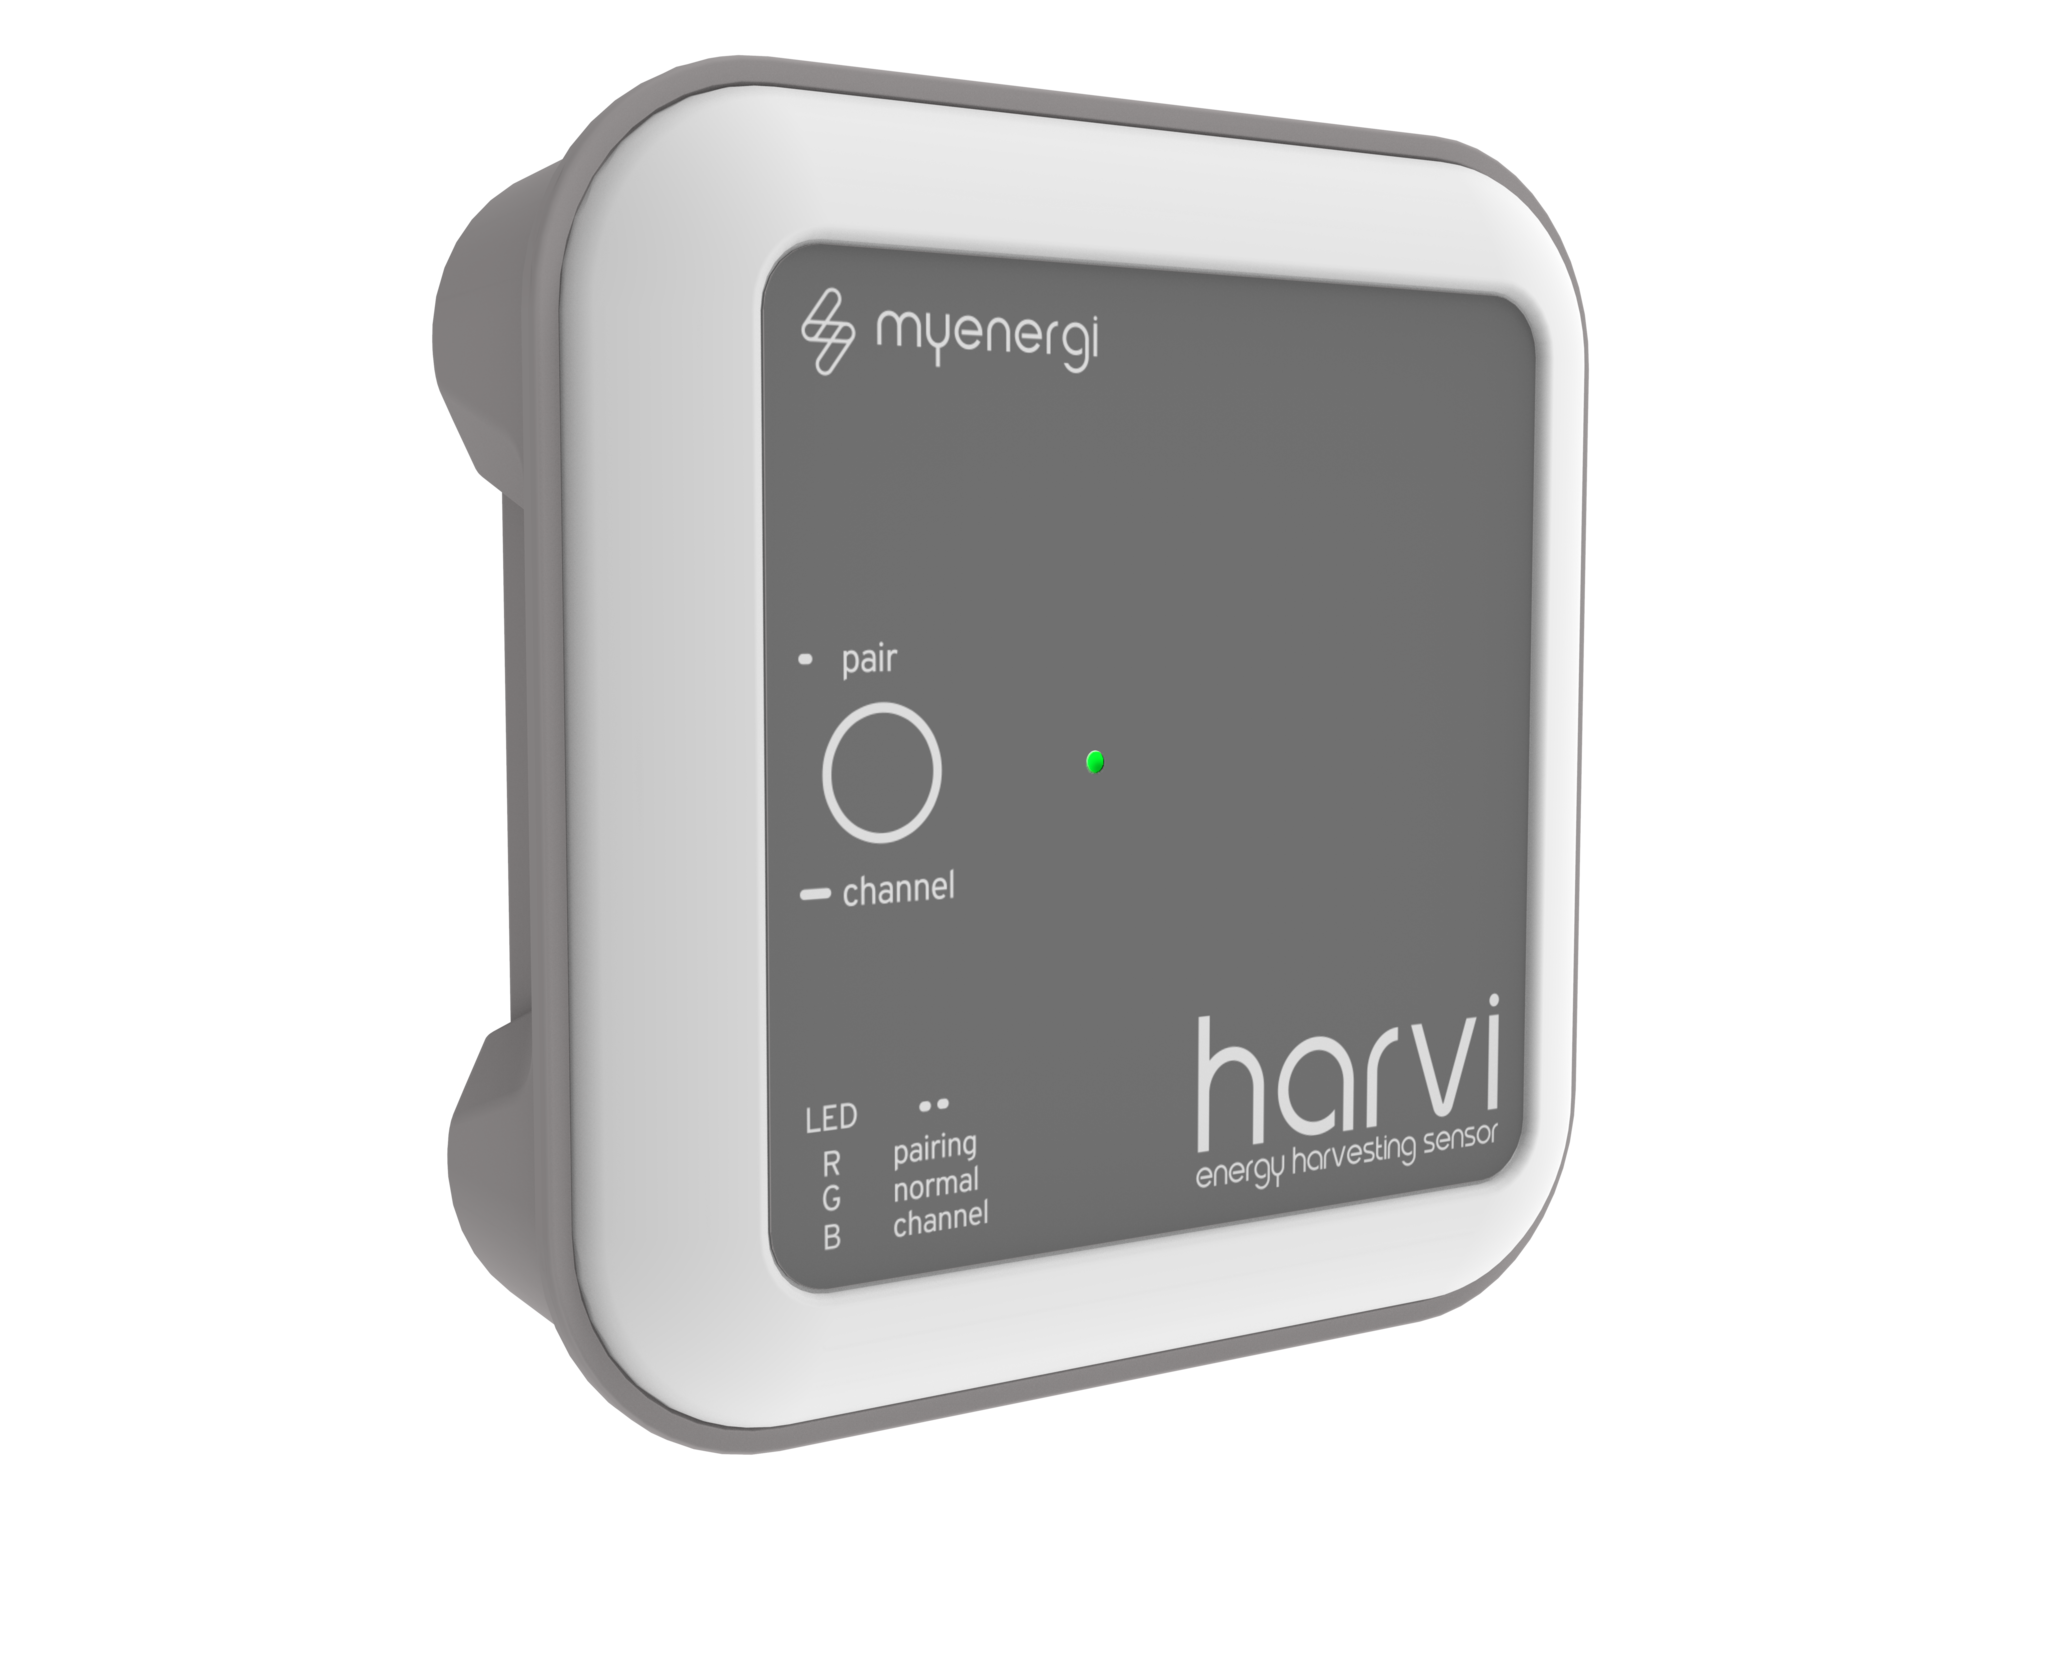 MyEnergi HARVI - energy harvesting wireless sensor